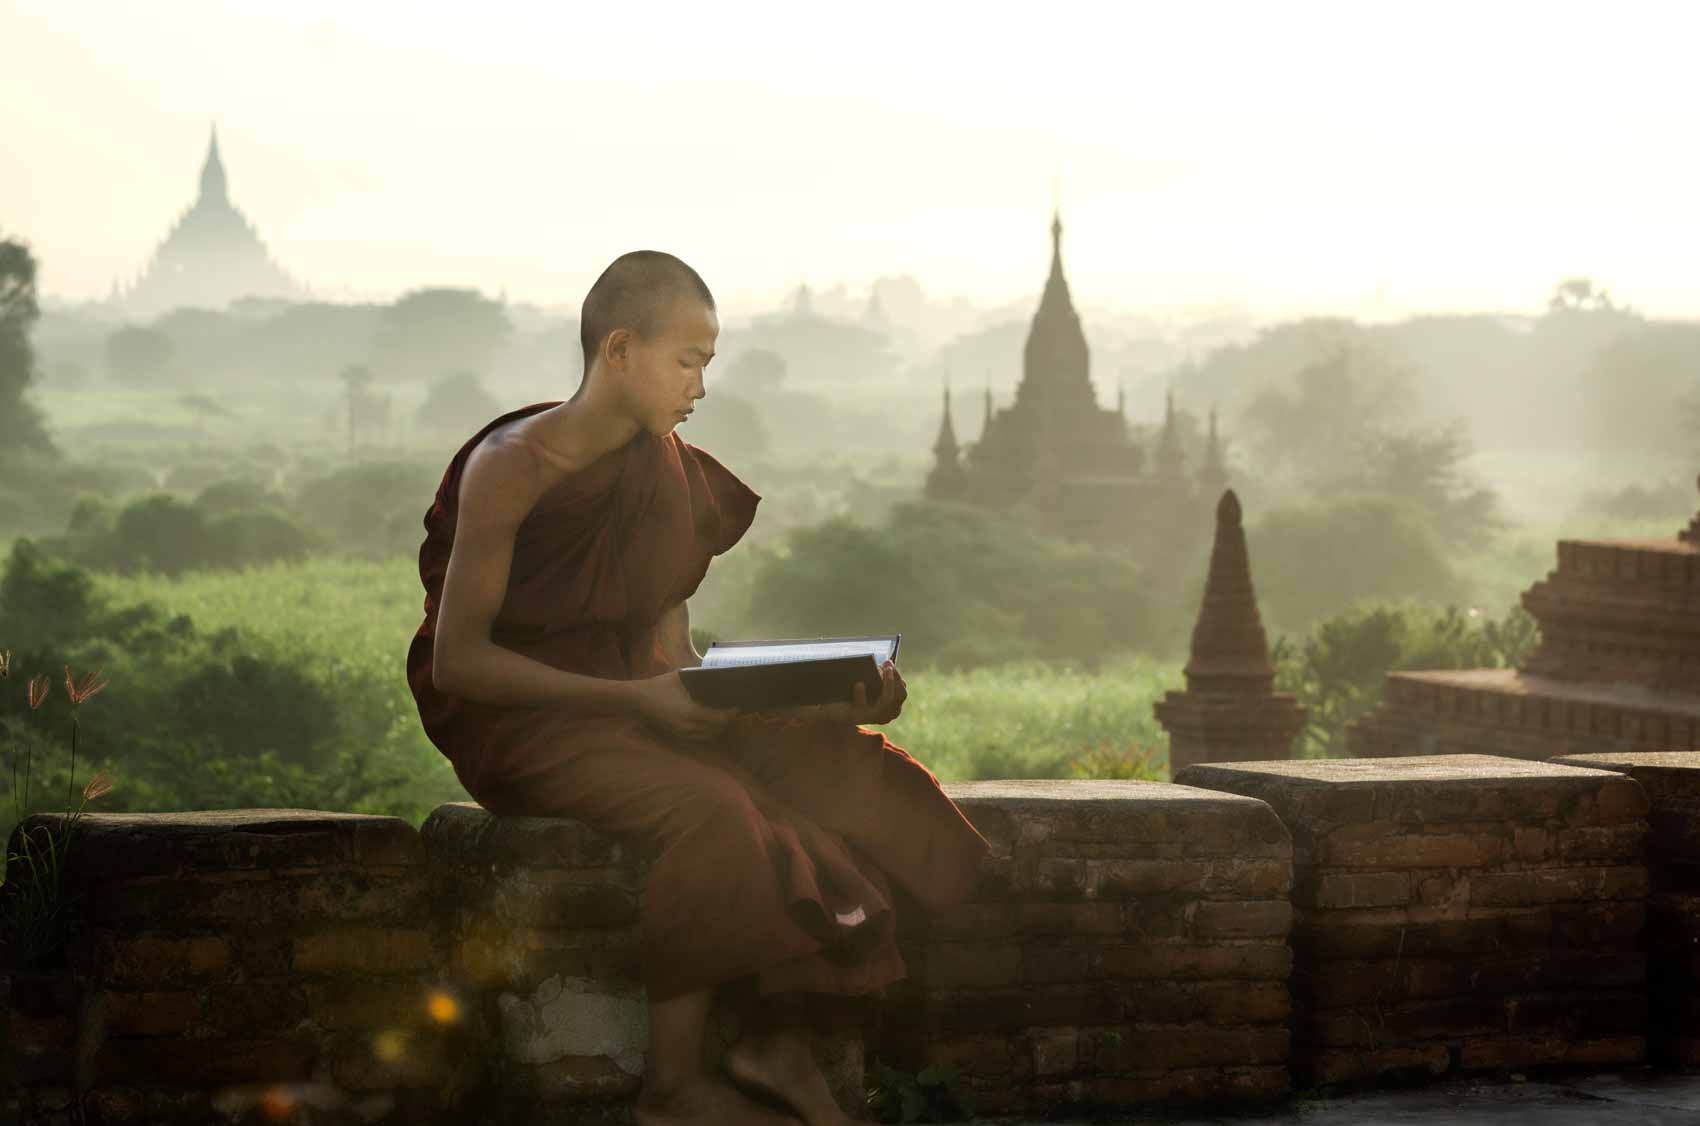 A monk reading at sunrise in Bagan - not using social media